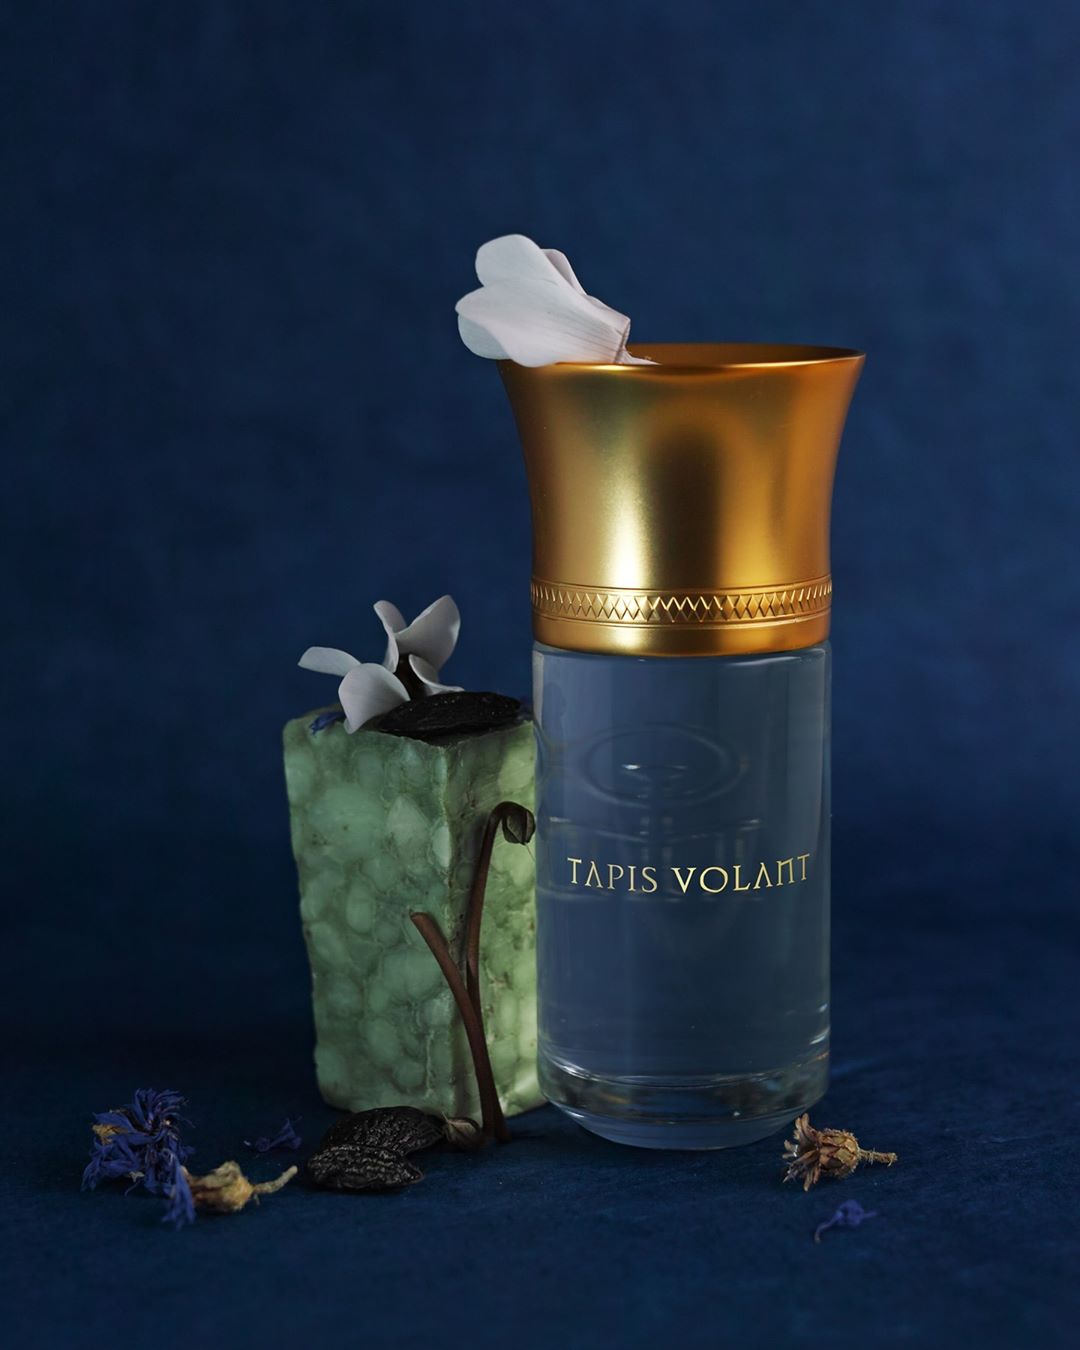 Liquides Imaginaires - Tapis Volant - Les Eaux de l’Est
A sensational ethereal floral fragrance, born from a weightless dream of an imaginary flight. #LiquidesImaginaires #LesEauxDelEst #TapisVolant #...